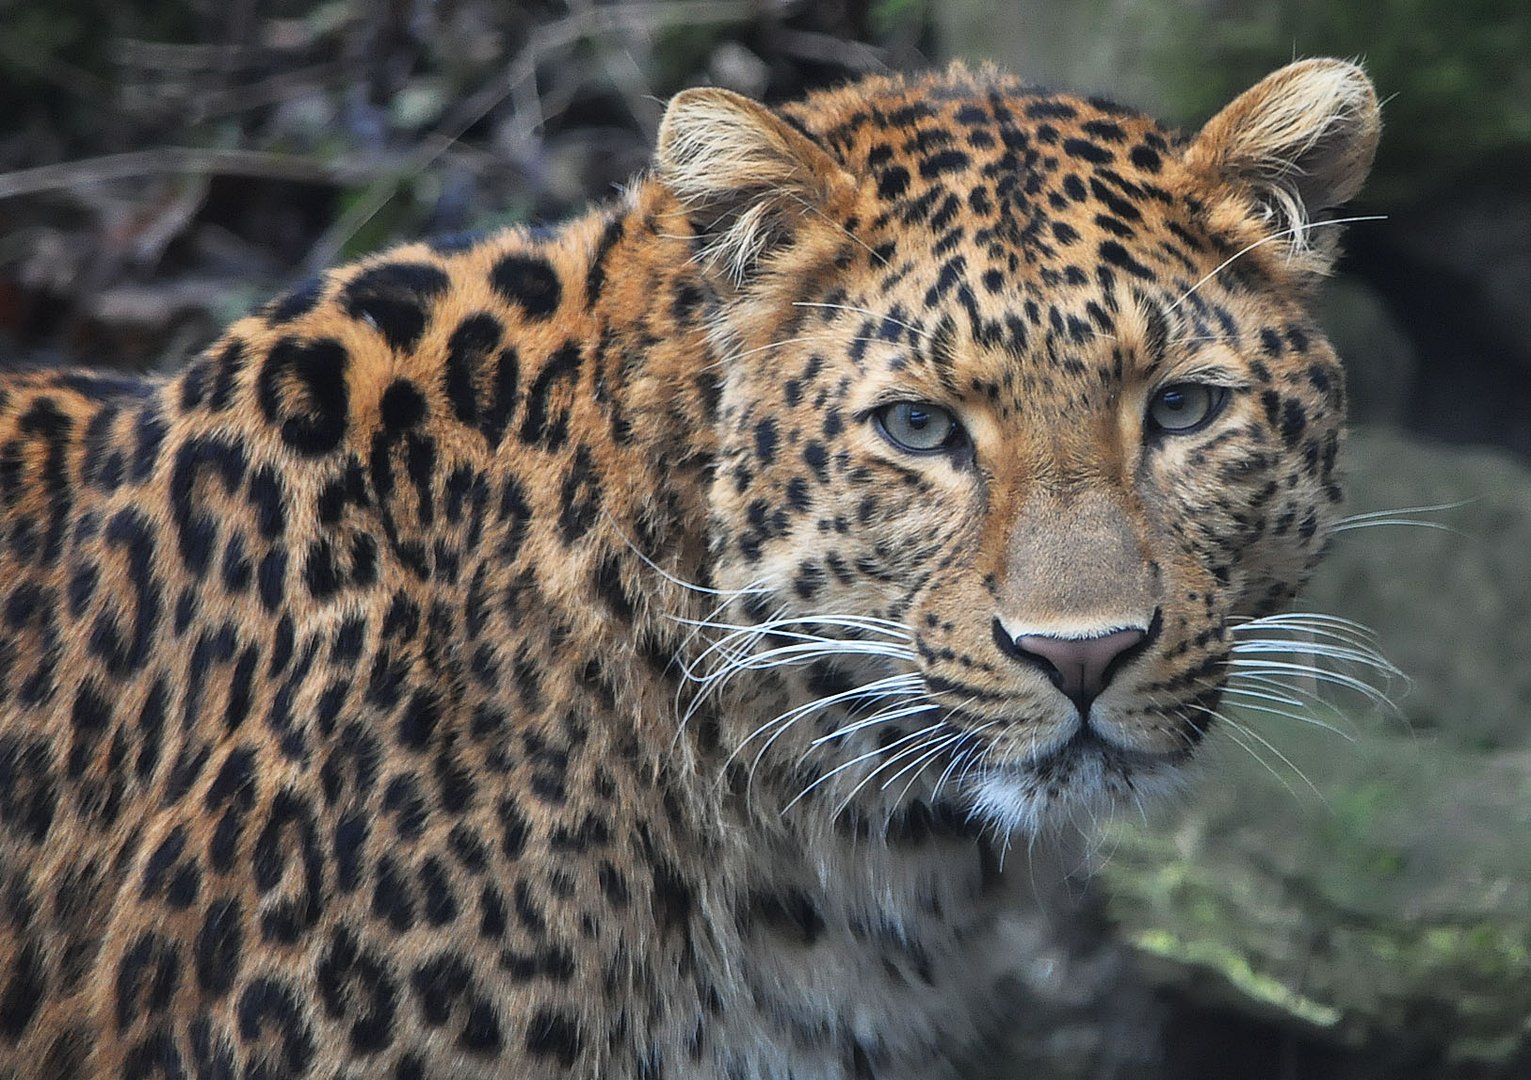 Leopard JULIUS - Tierpark München "Hellabrunn"